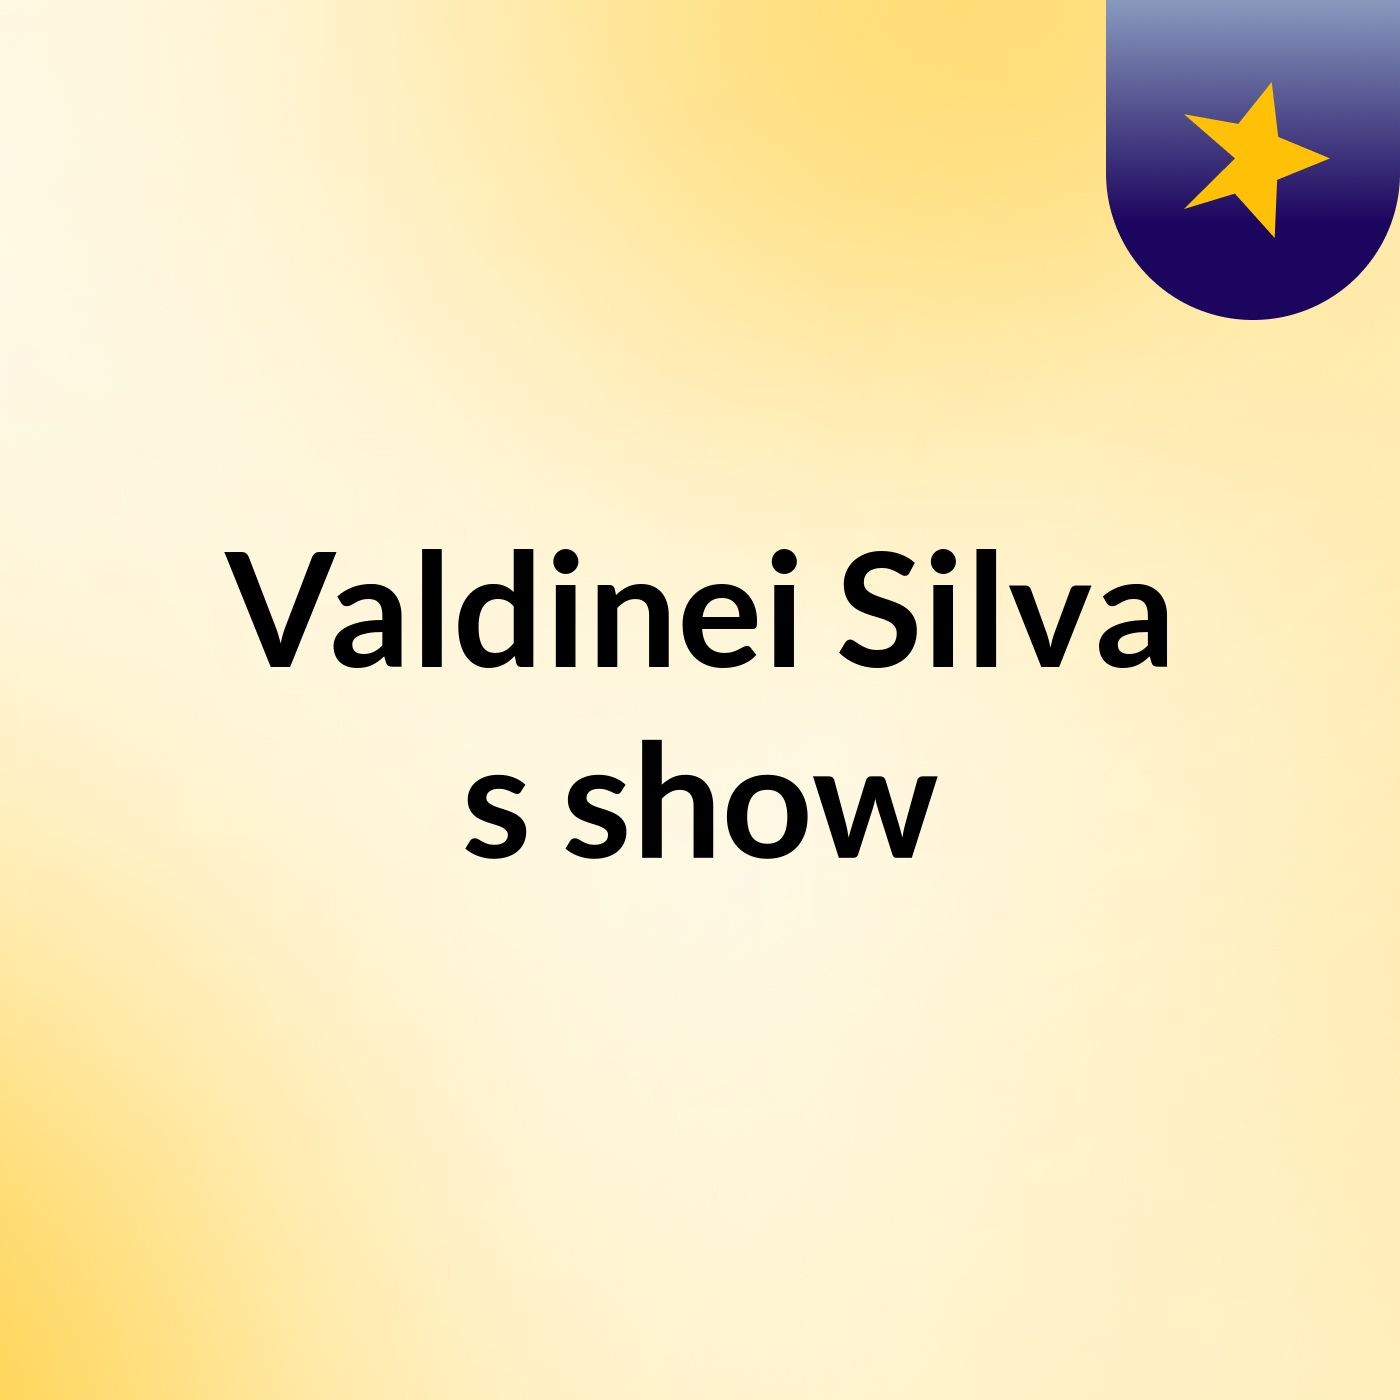 Valdinei Silva's show